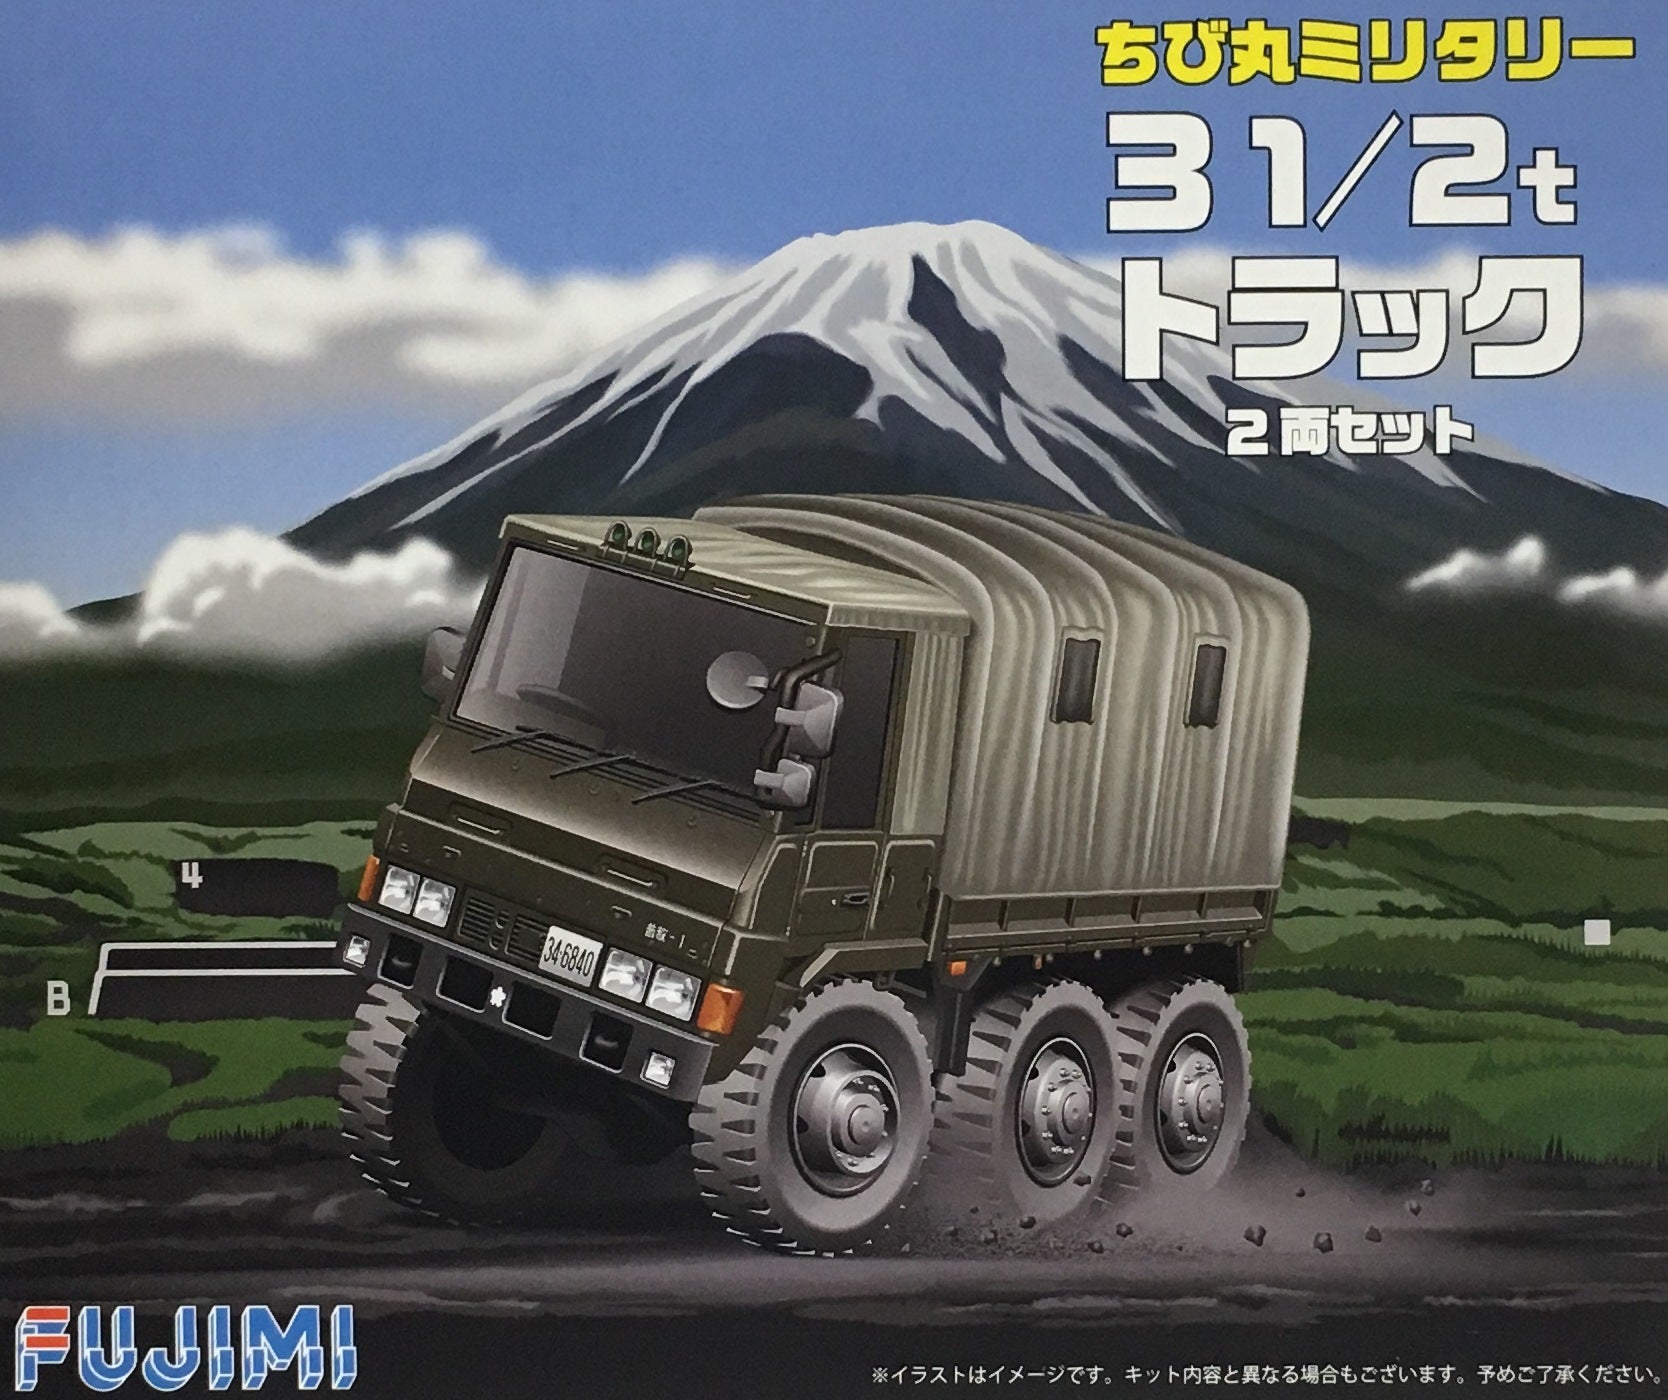 TM3 Chibimaru 3 1/2t Truck Set of 2